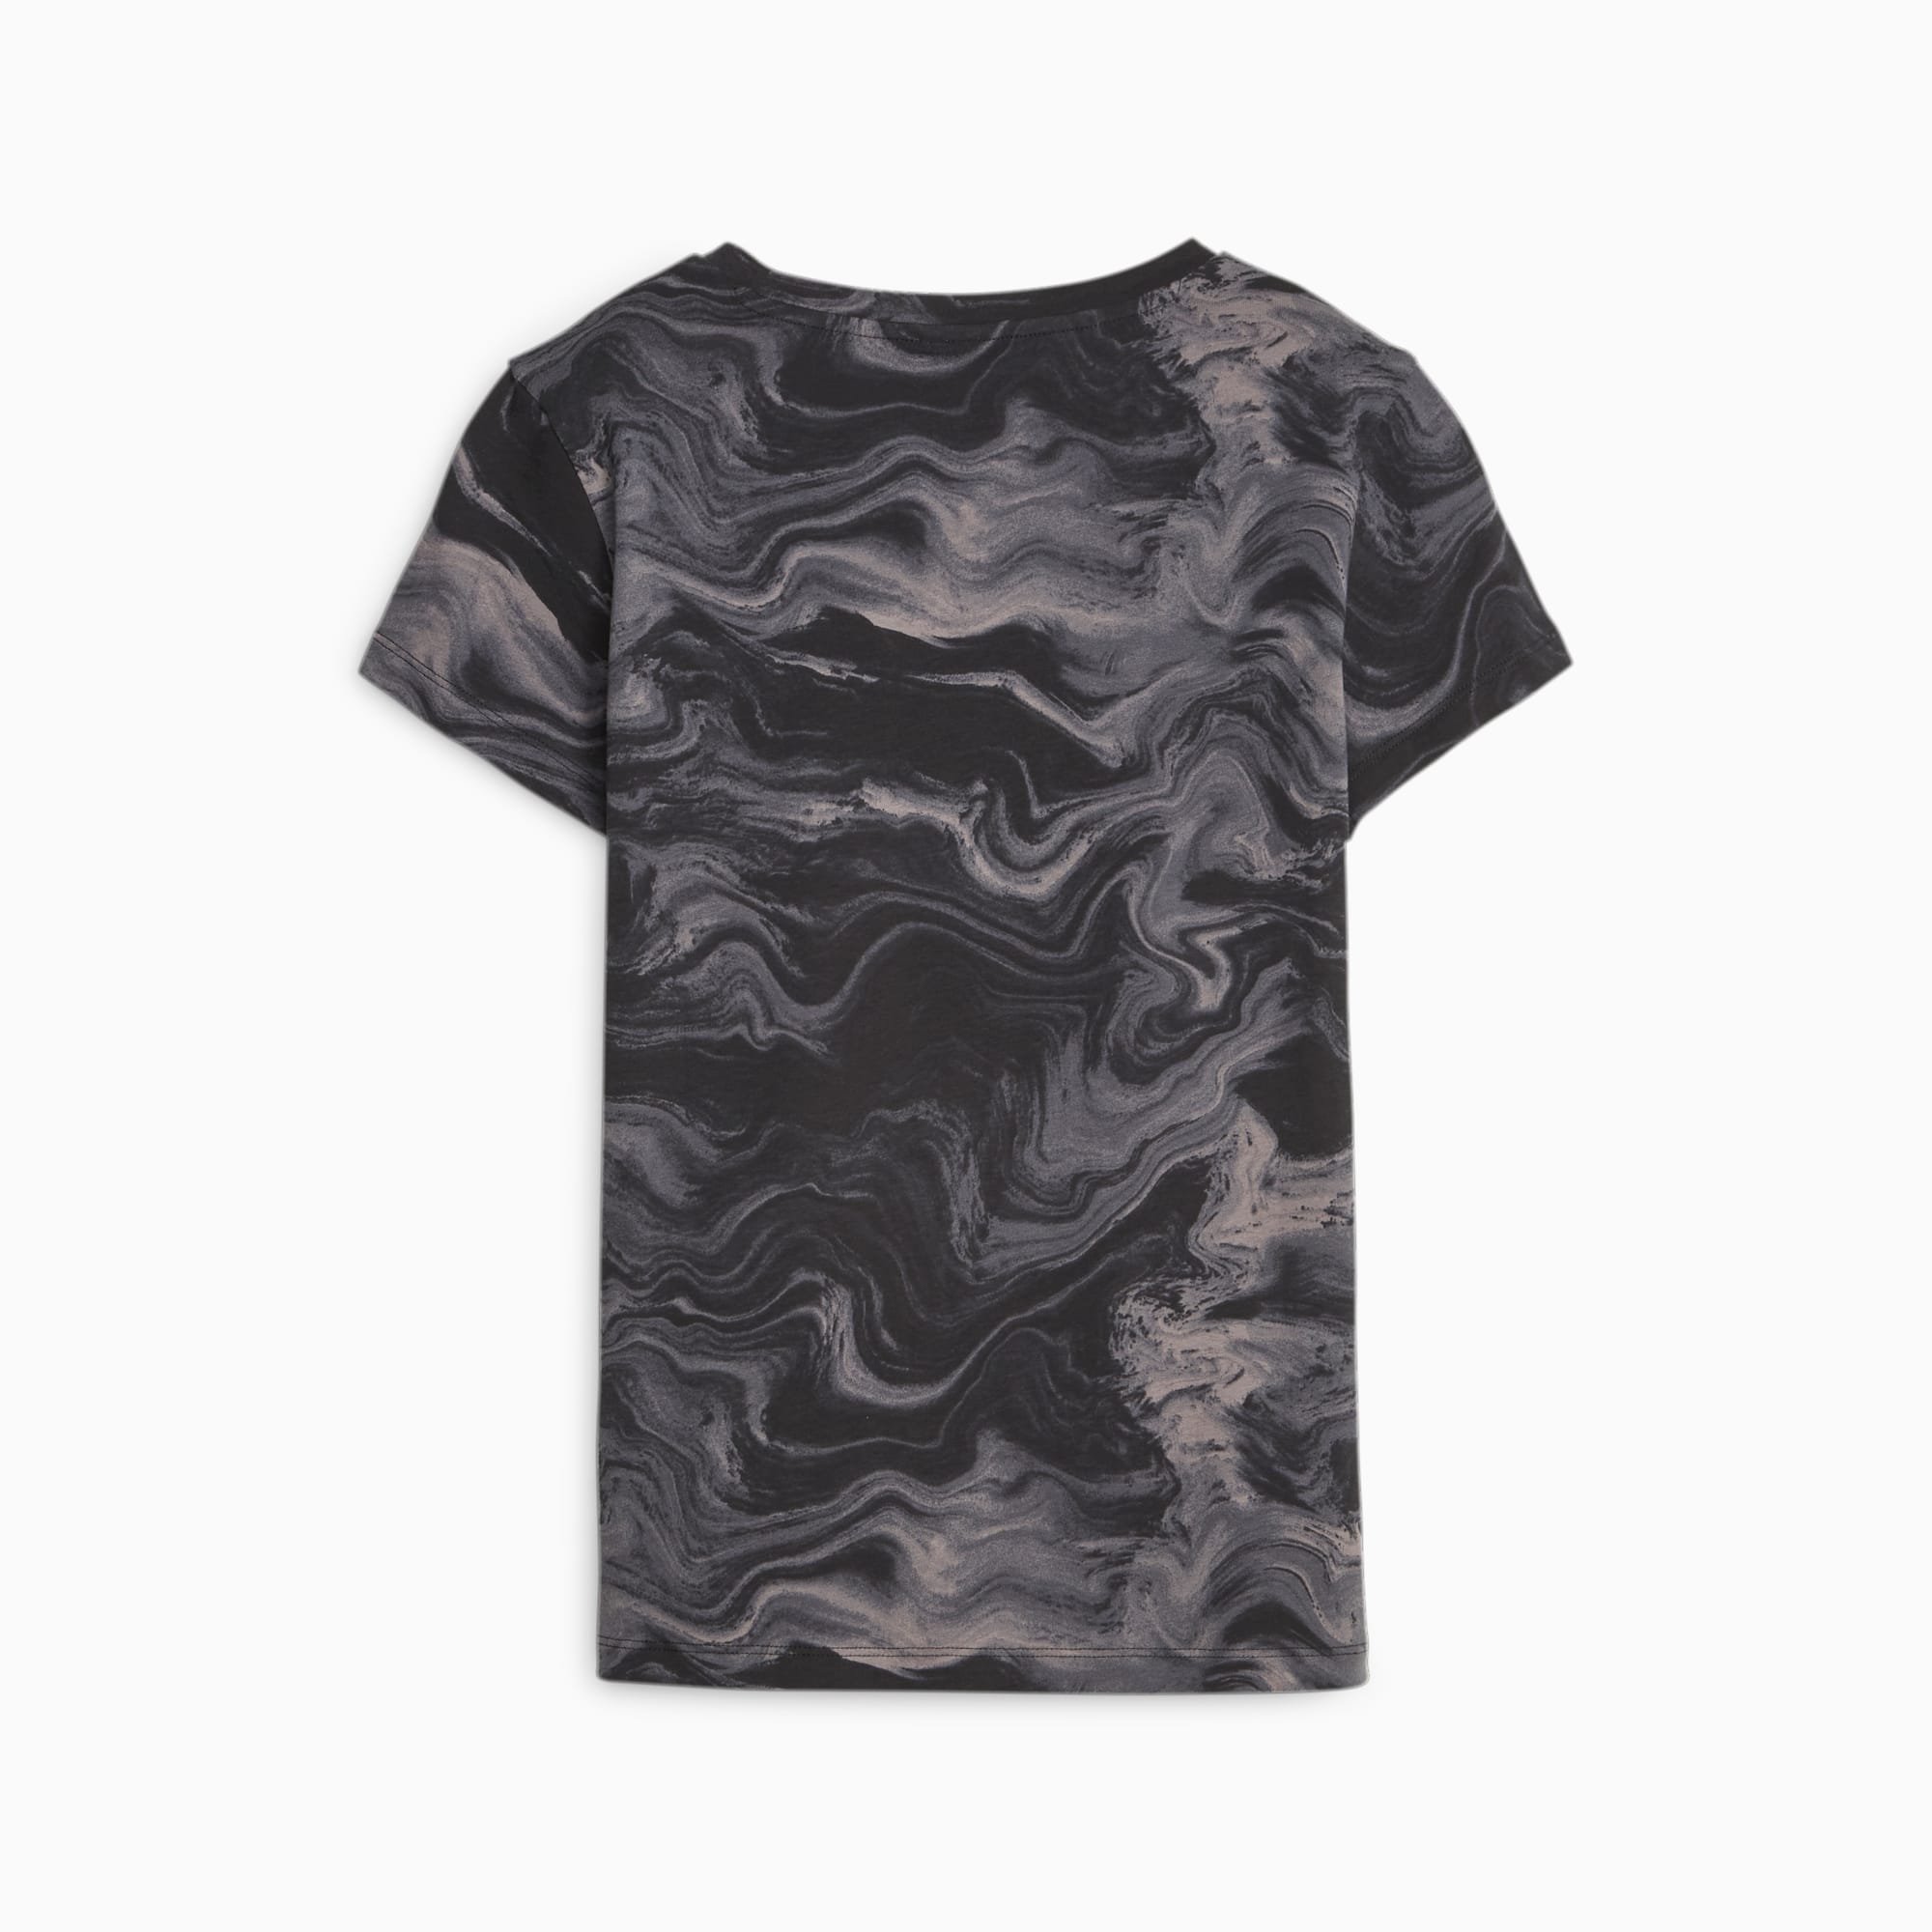 PUMA Ess+ Marbleized Women's T-Shirt, Black, Size XS, Clothing